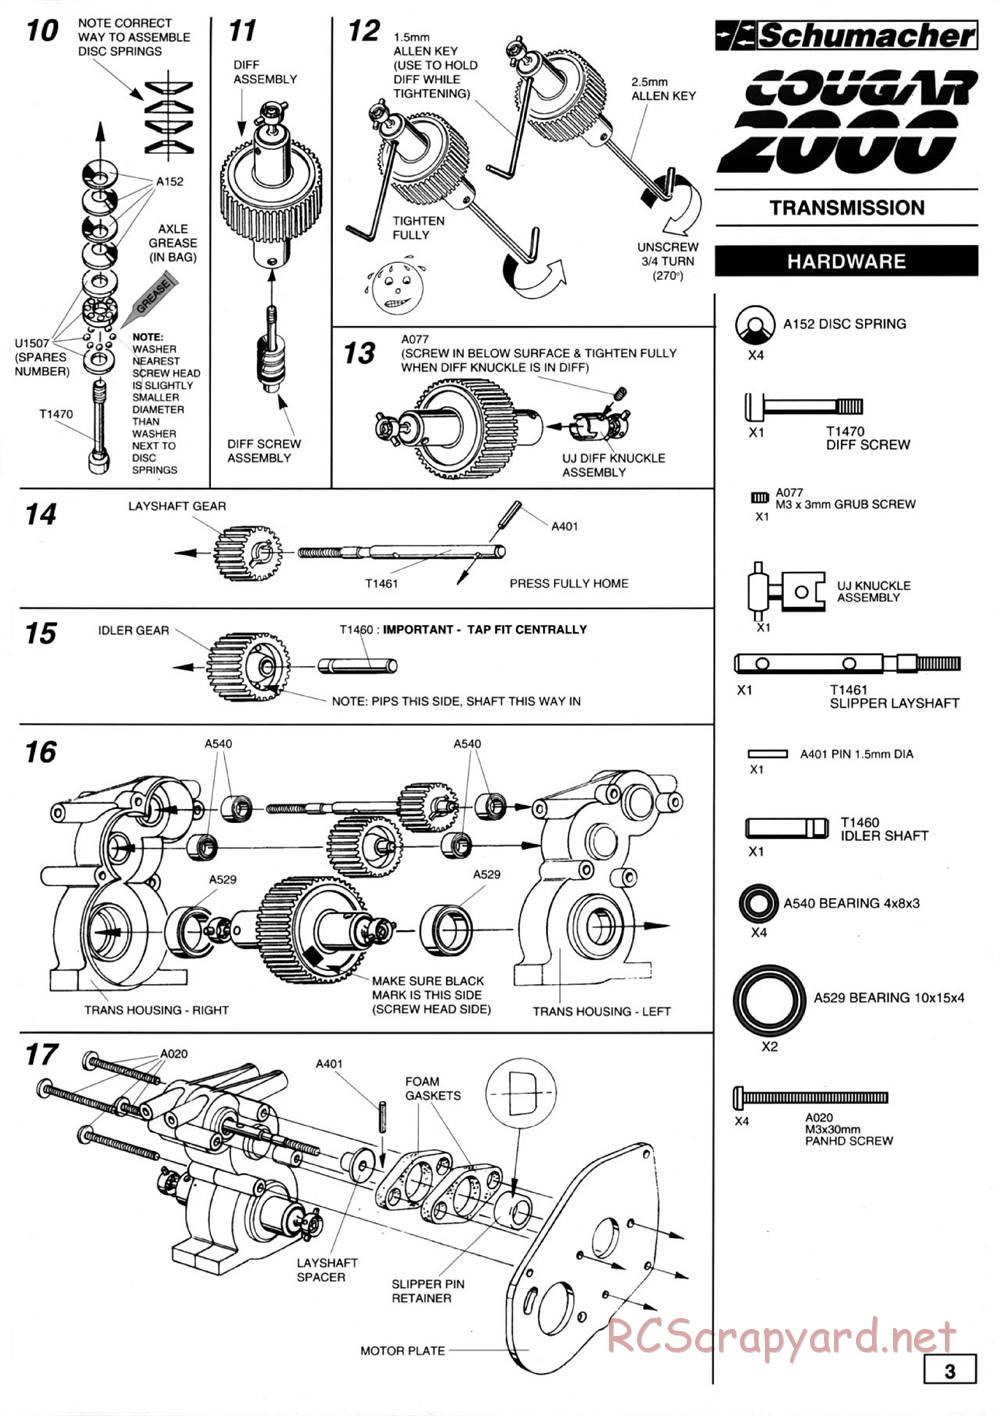 Schumacher - Cougar 2000 - Manual - Page 5